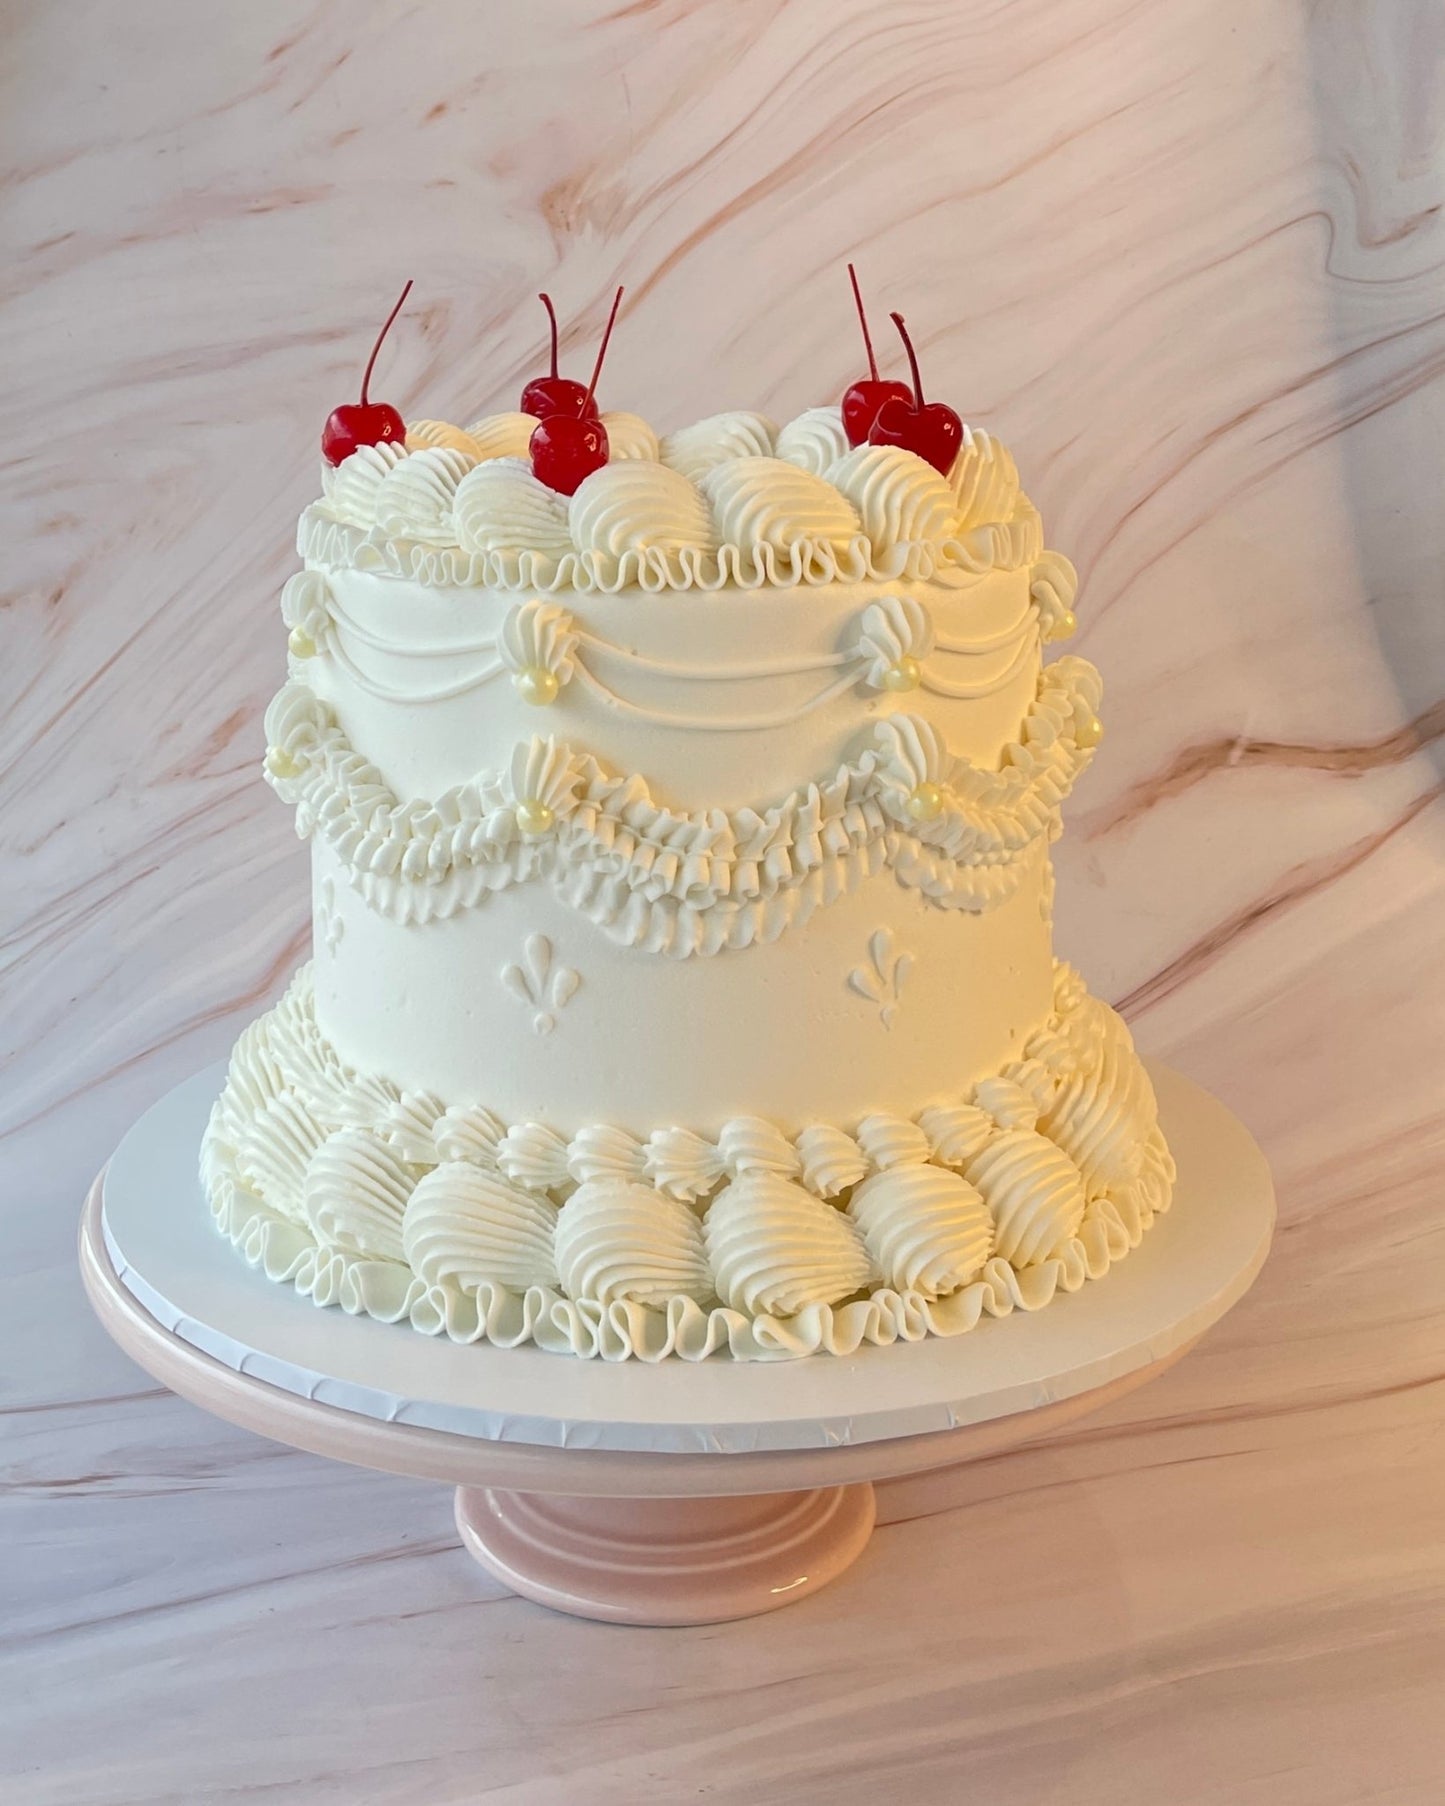 White with Red Cherries Vintage Cake - Flour Lane